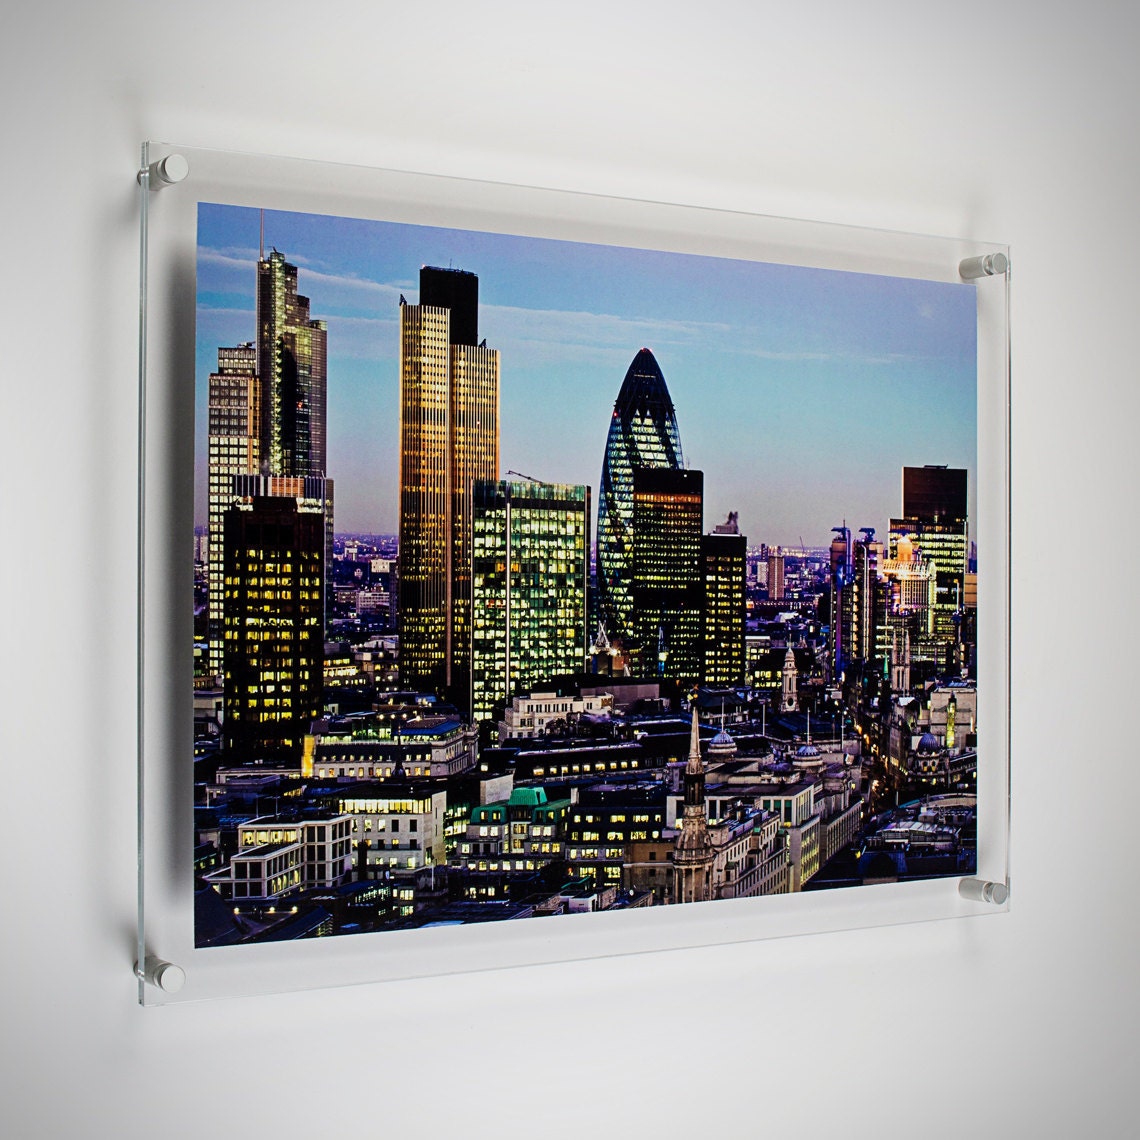 Acrylic Perspex Wall Mounted Photo Frame Premium acrylic